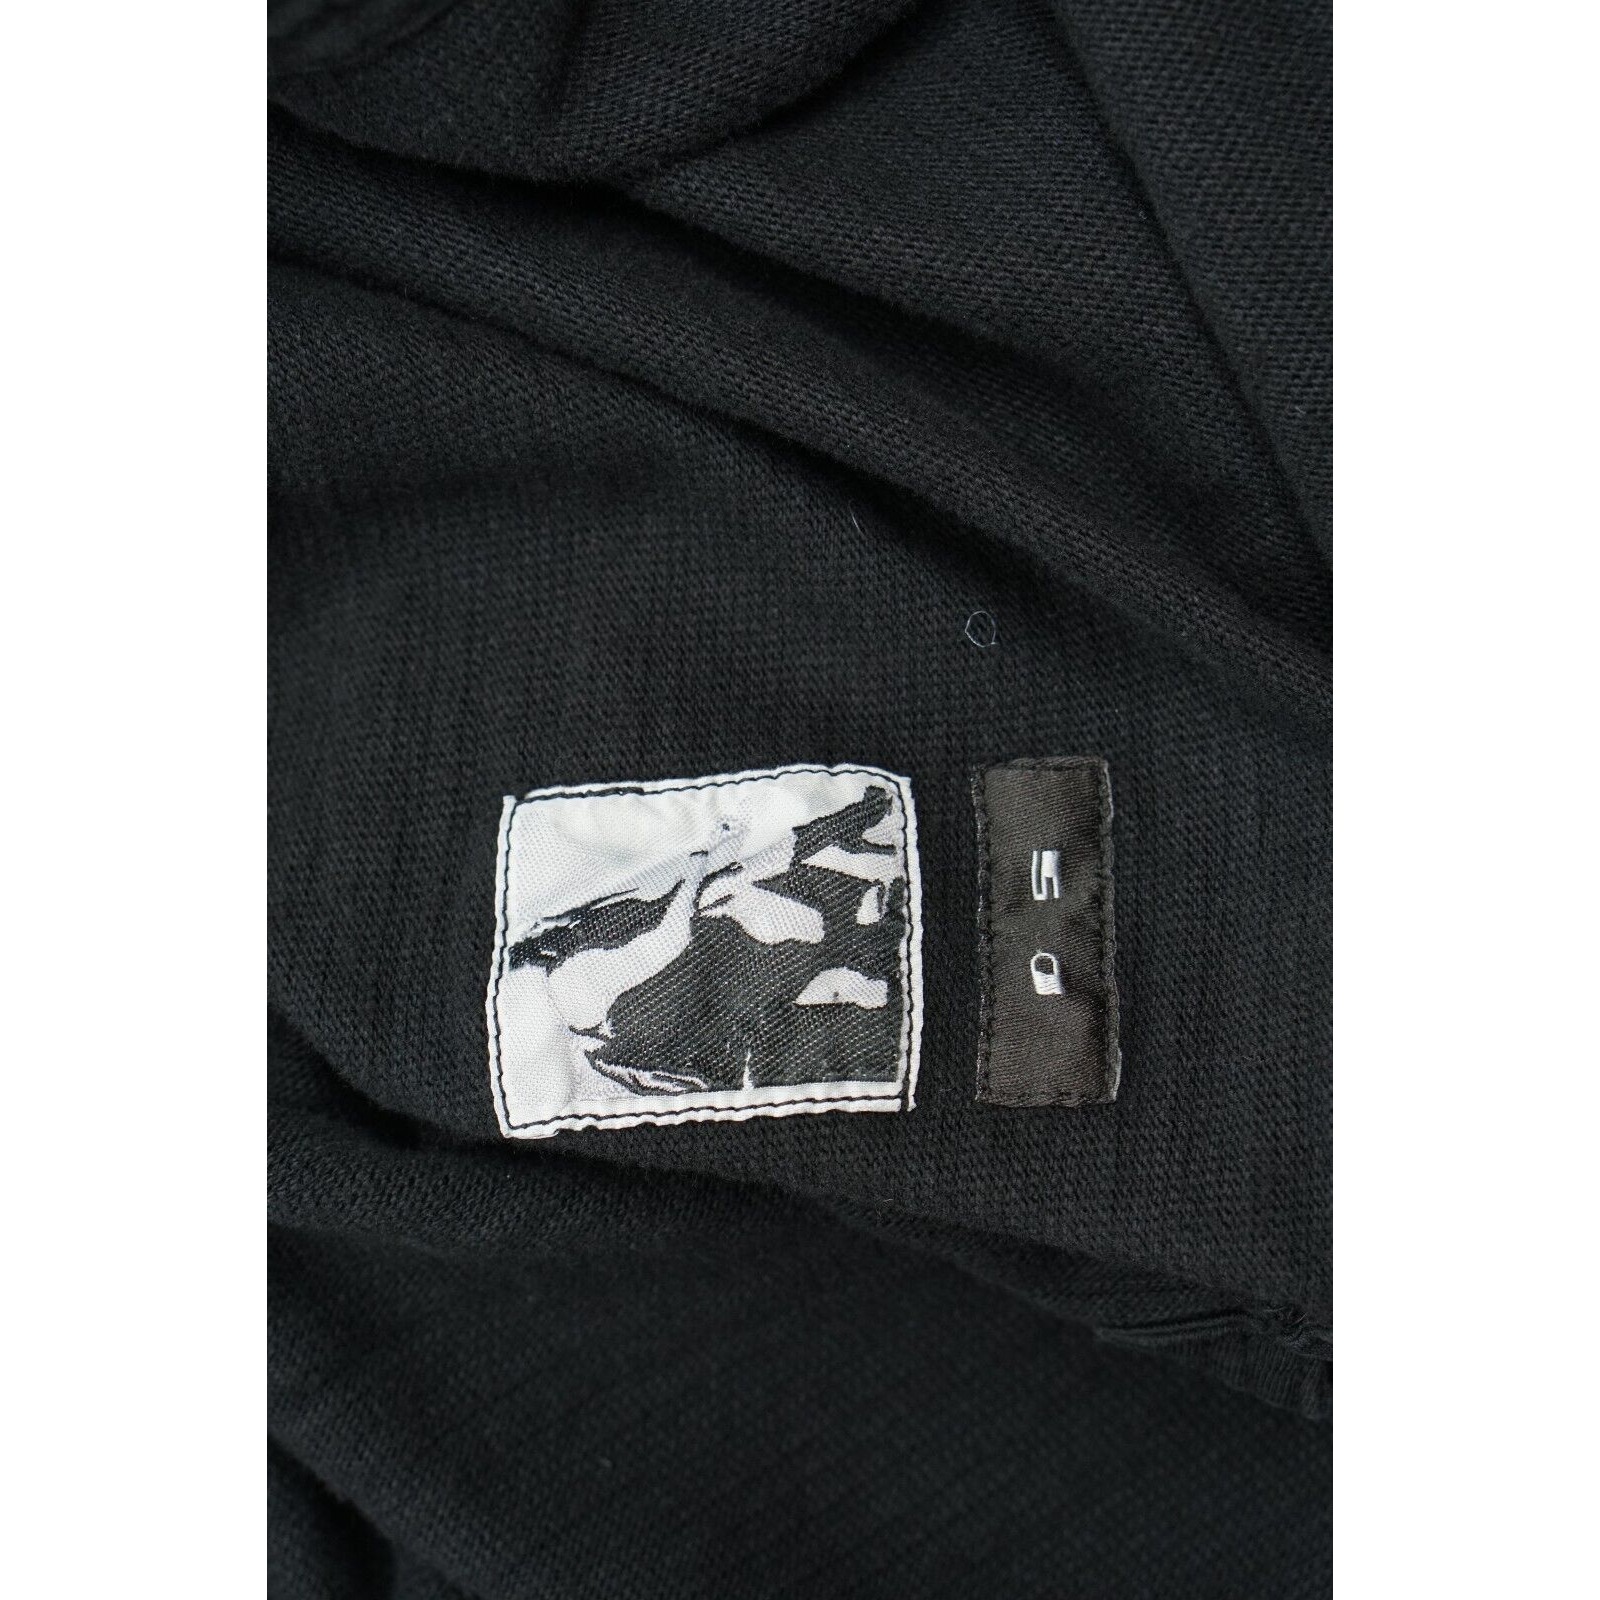 Black Zip Up Sleeveless Jacket Hoodie Cotton - Medium - 6